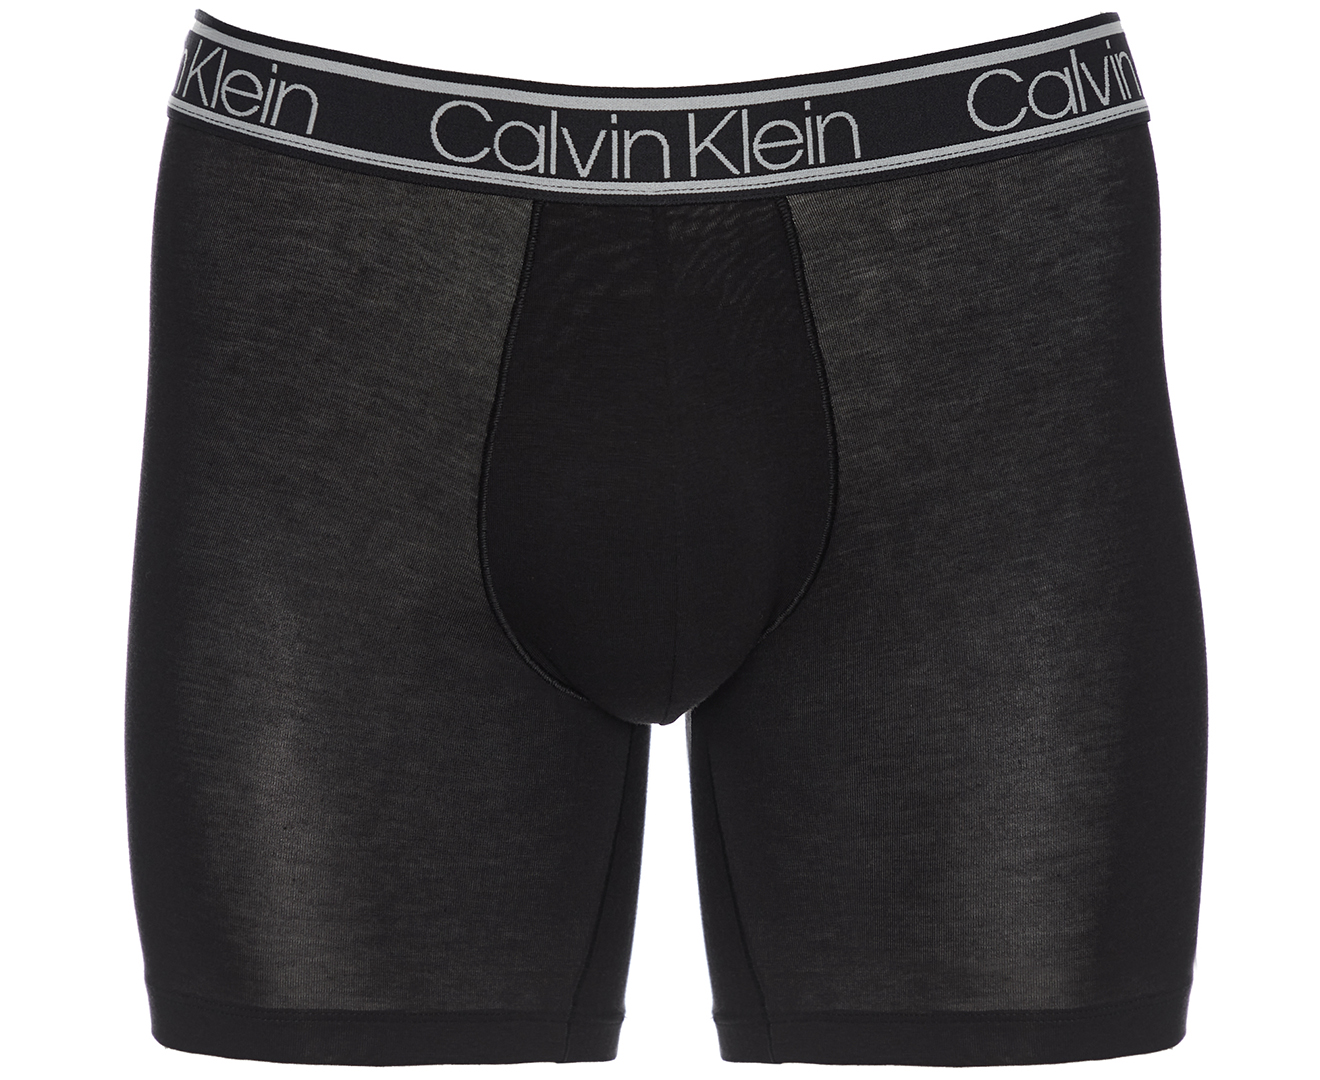 Calvin Klein Men's Bamboo Comfort Boxer Brief 3-Pack - Black 